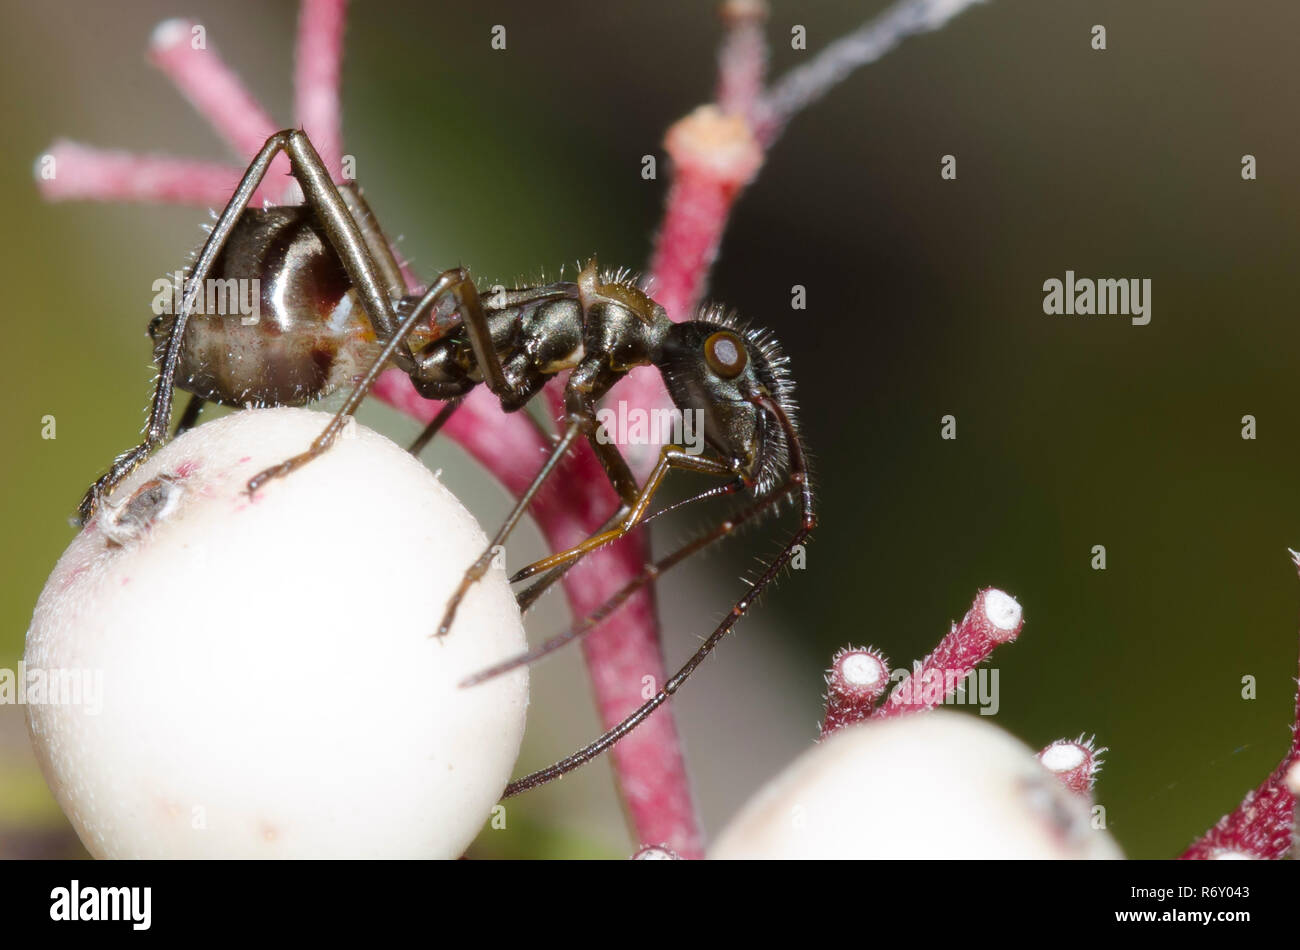 Broad-headed Bug, Family Alydidae, ant mimic nymph feeding on fruit of roughleaf dogwood, Cornus drummondii Stock Photo